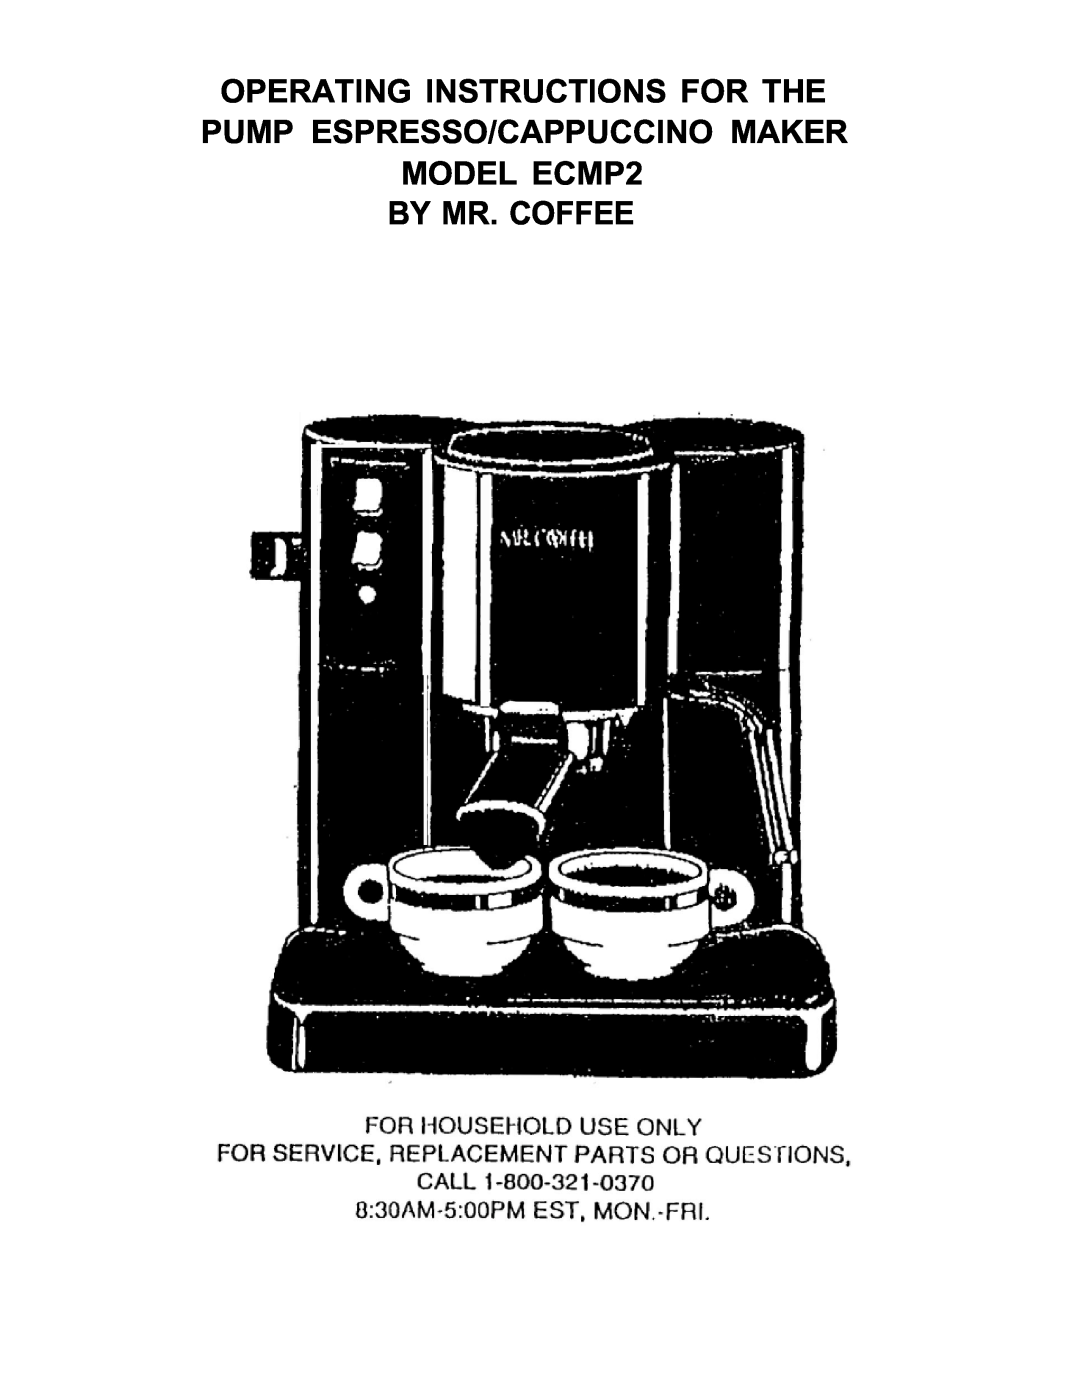 Mr. Coffee ECMP2 manual By Mr. Coffee 